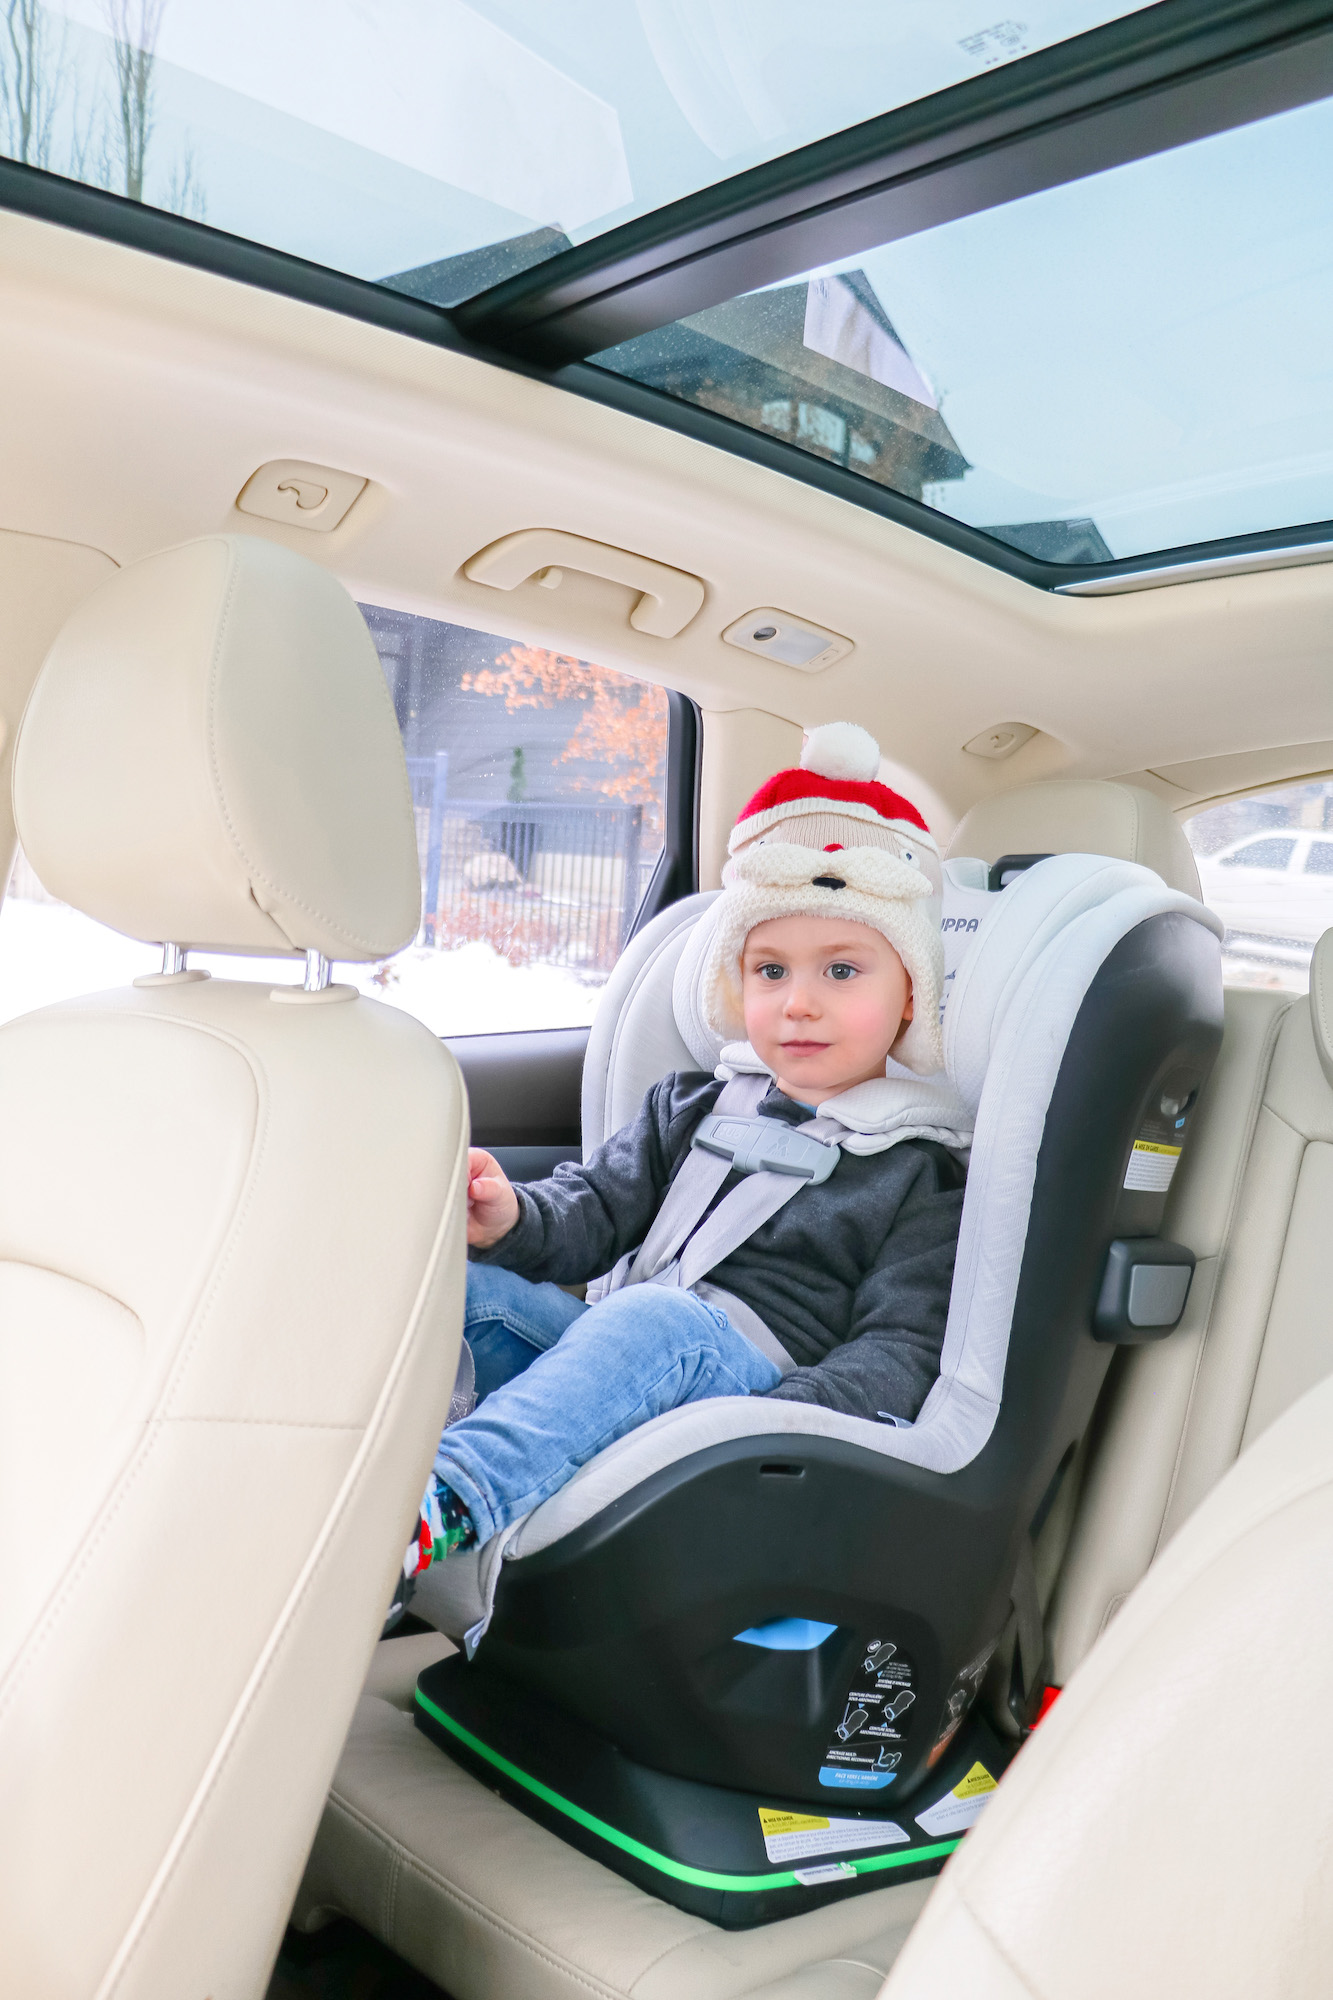 https://chandeliersandchampagne.com/wp-content/uploads/2021/12/Uppababy-knox-toddler-car-seat-1.jpg